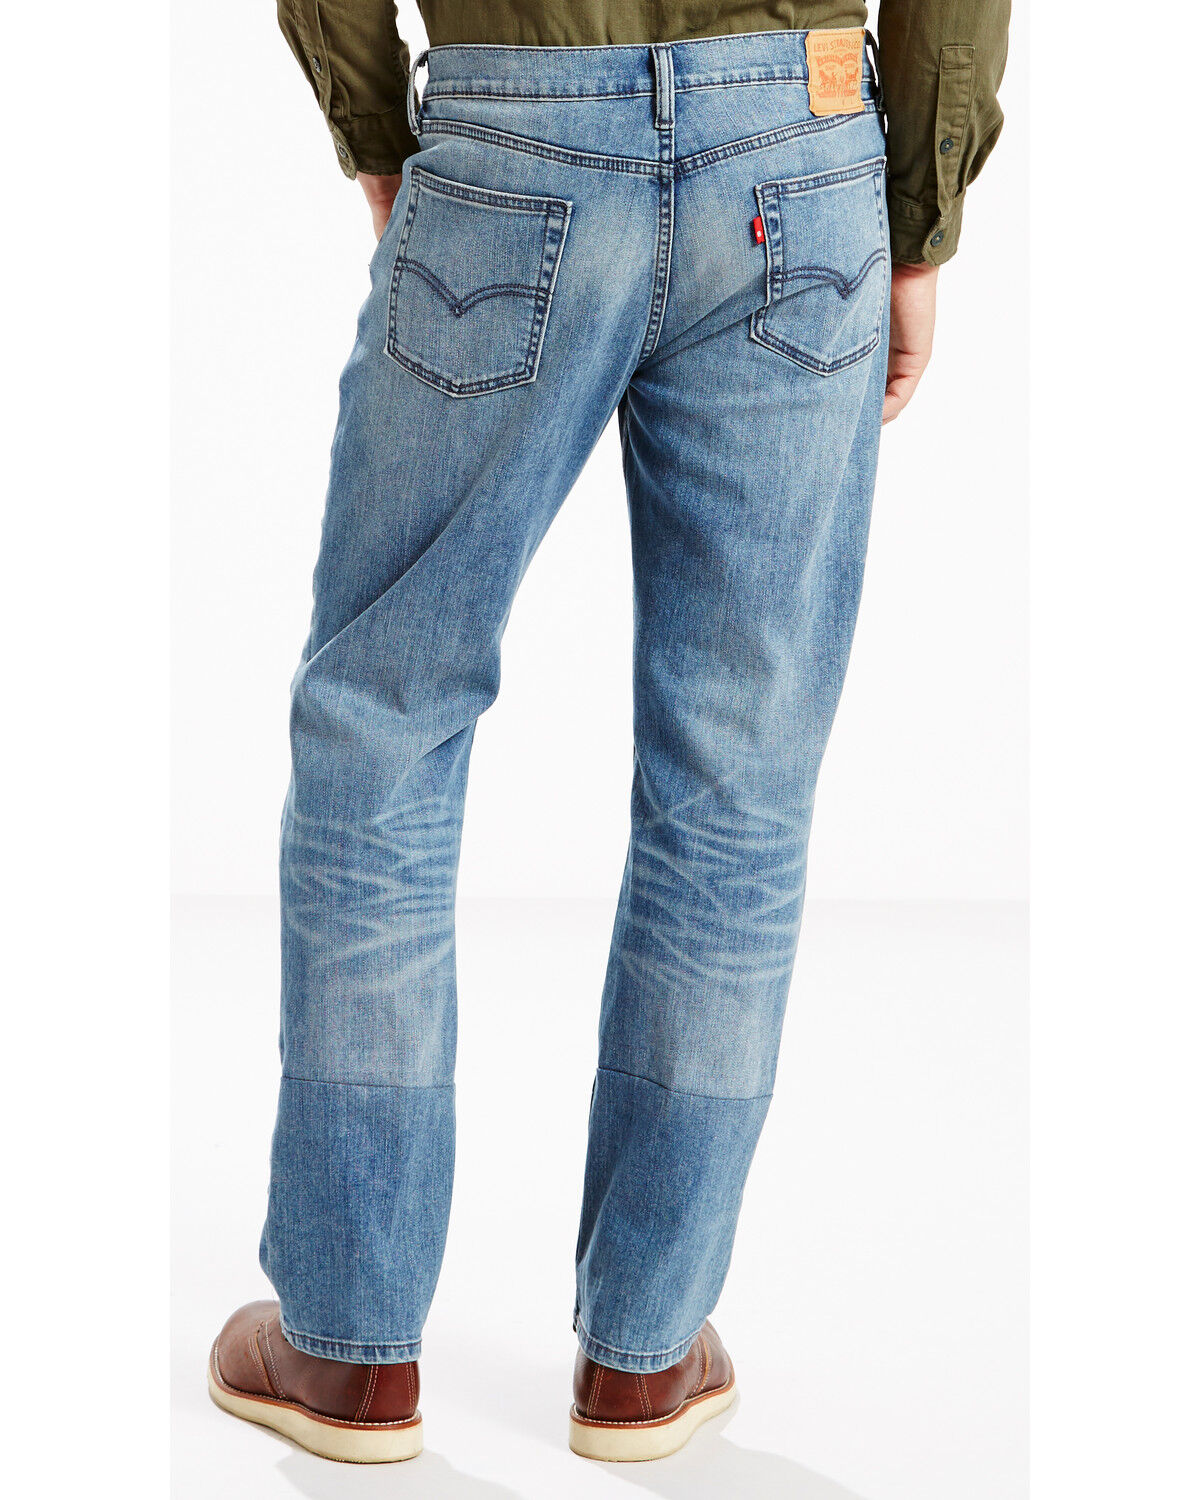 levi's 514 slim fit jeans